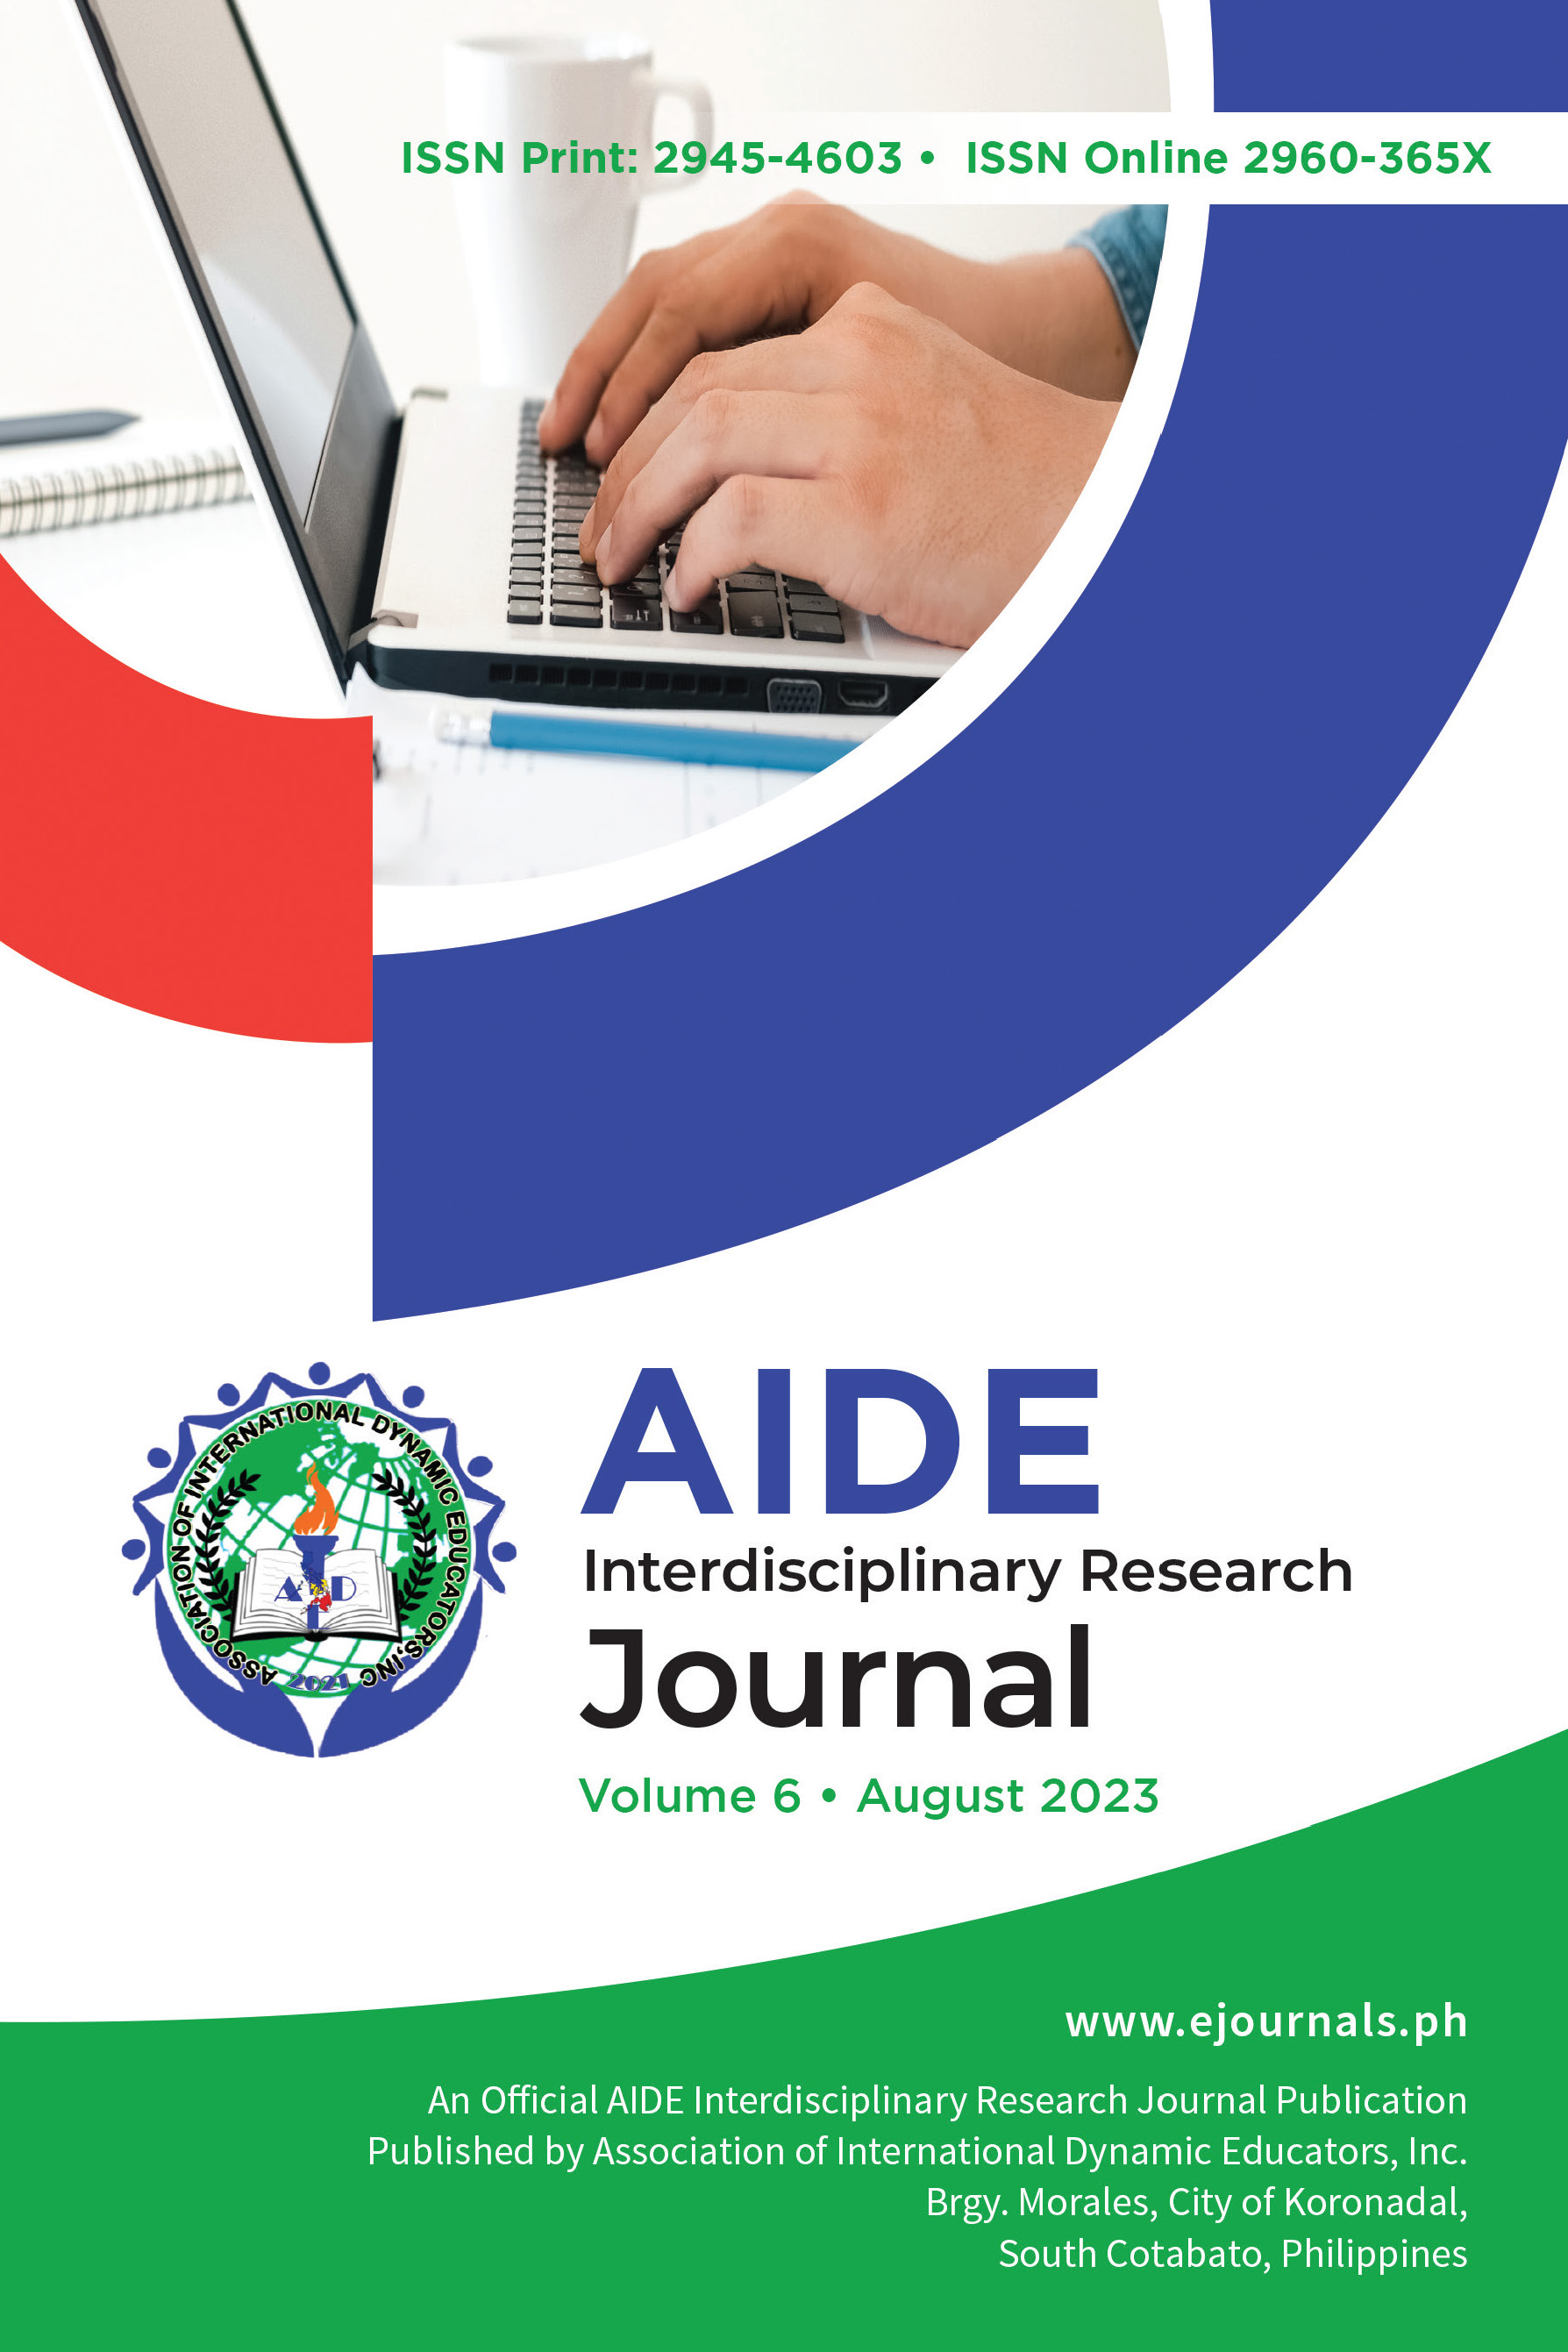 AIDE-IRJ Volume 6 (2023) Cover